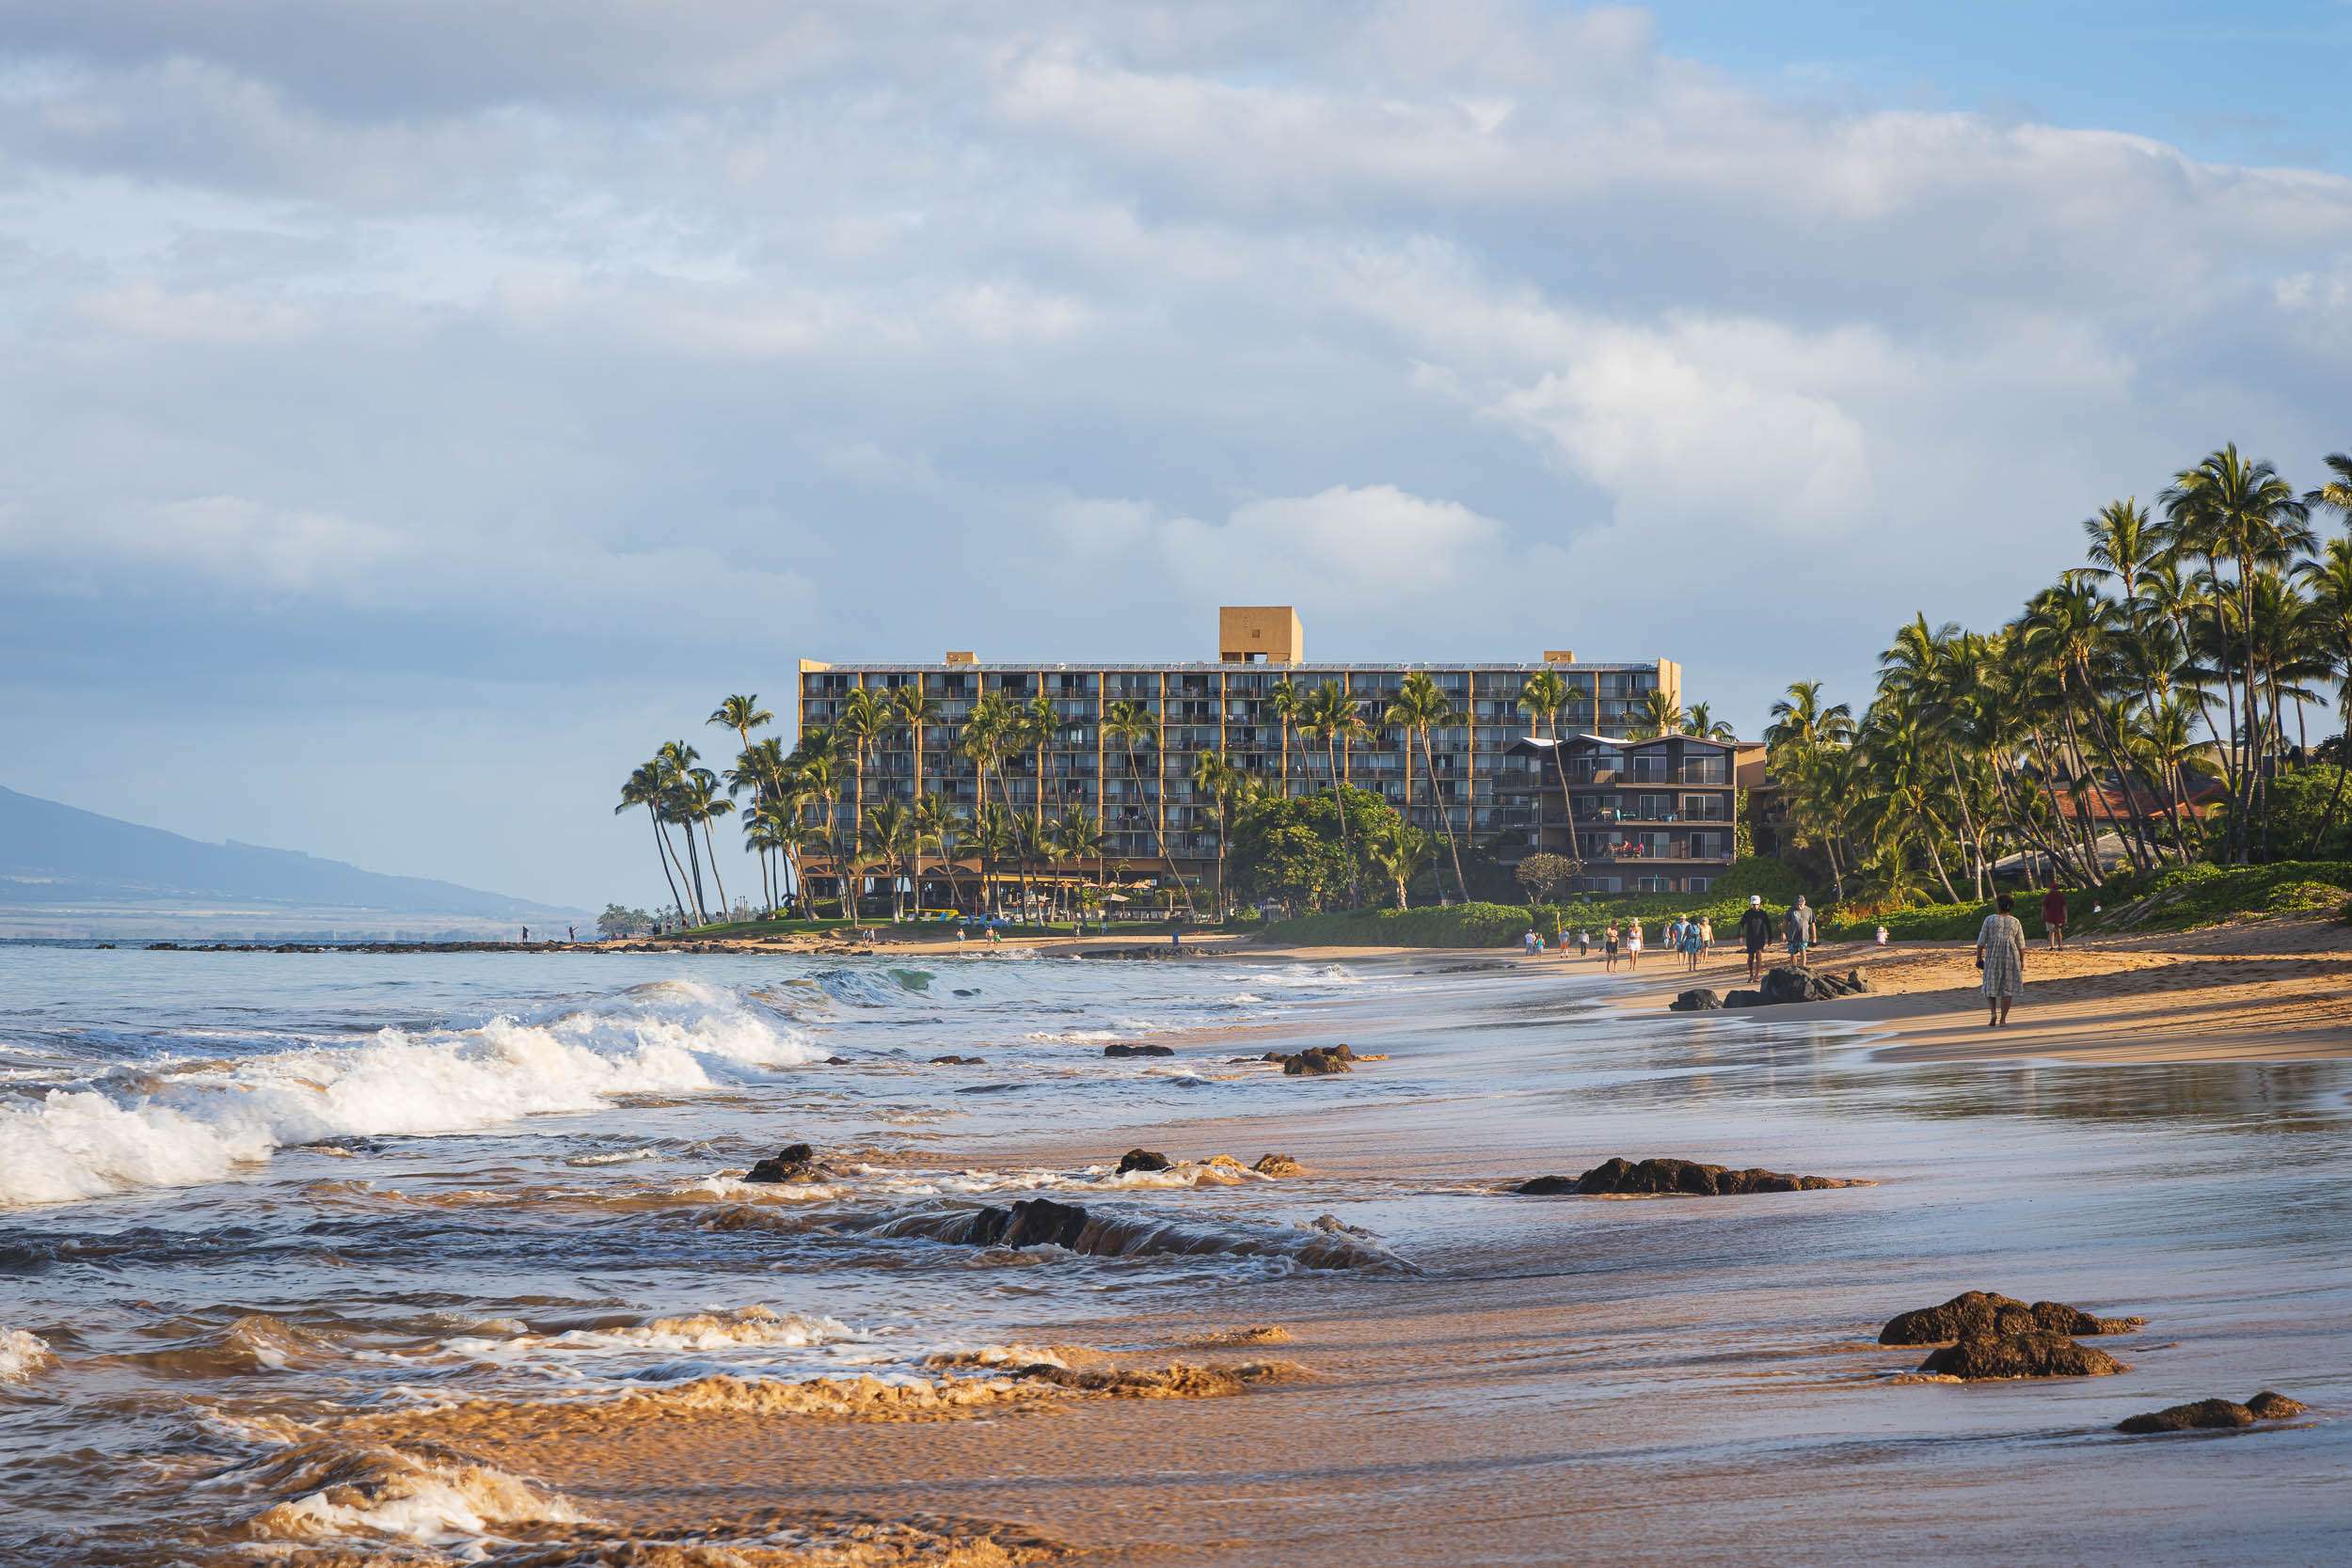 A beachfront hotel in Maui, Hawai'i